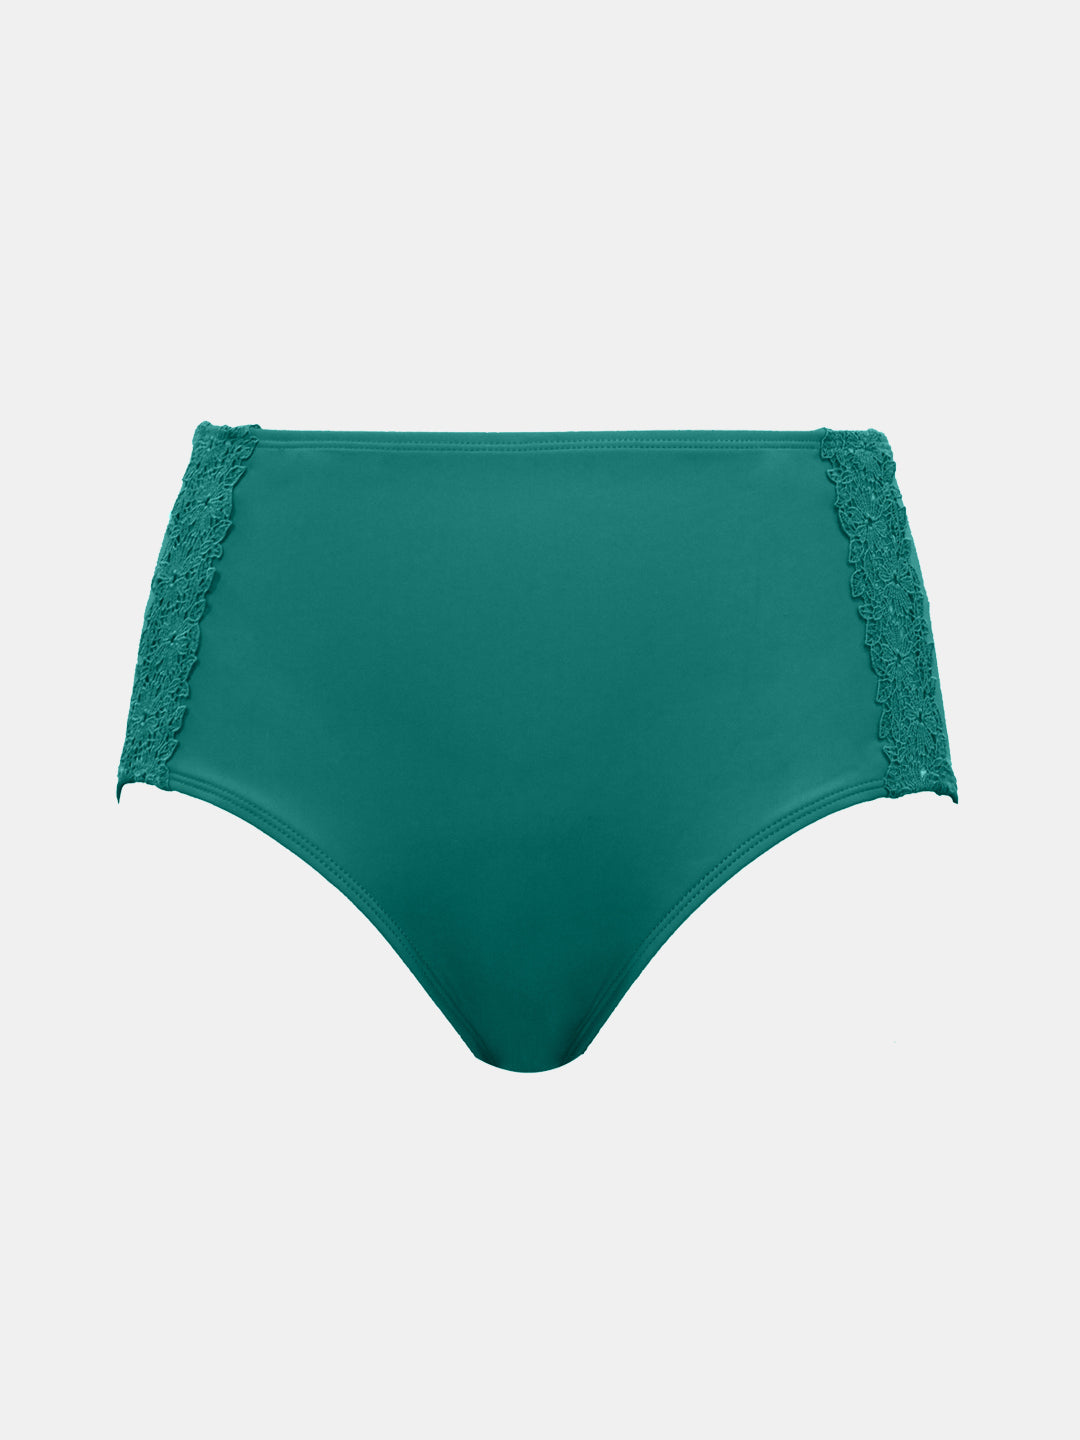 Brigitte Highwaist Swimwear Bottom - Dark Mint - S8205